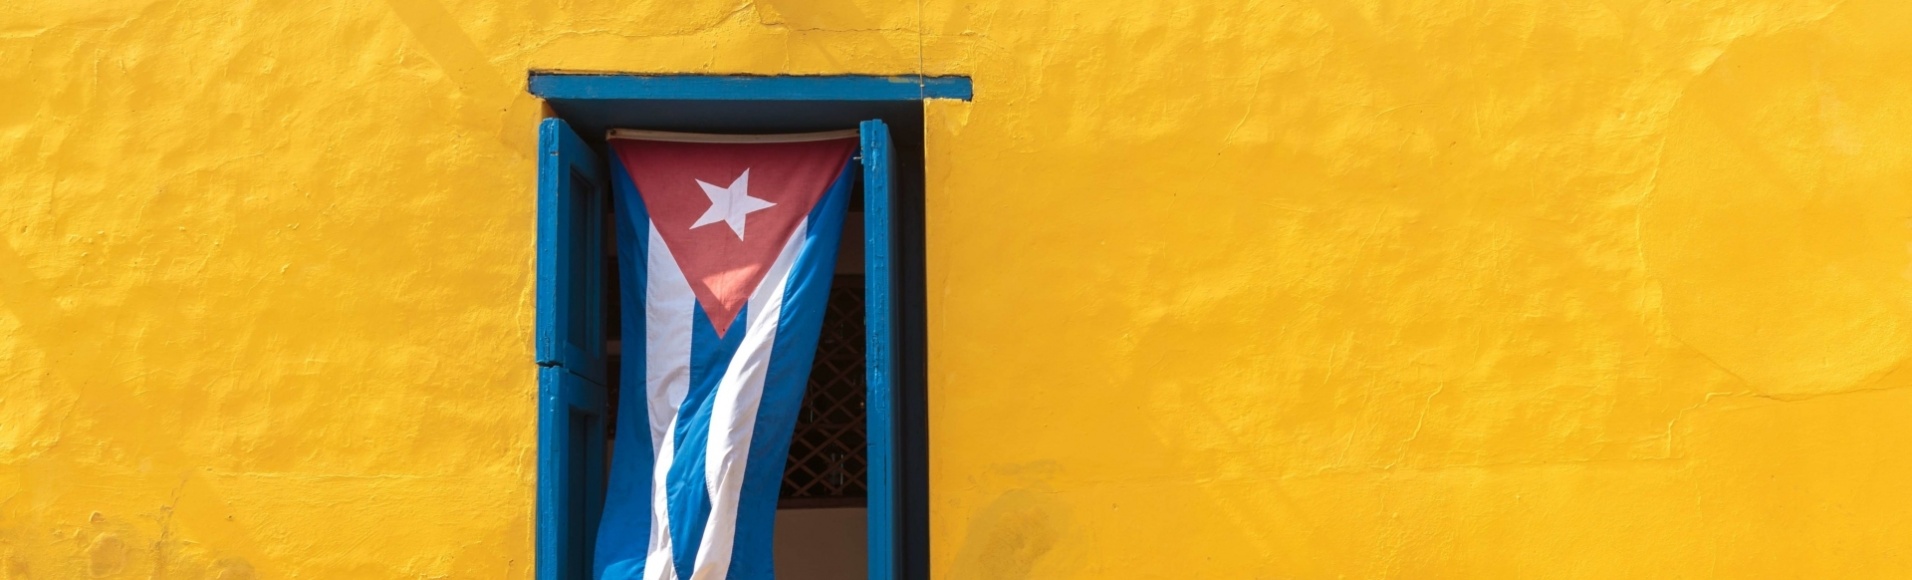 drapeau-cubain-fenetre-trinidad